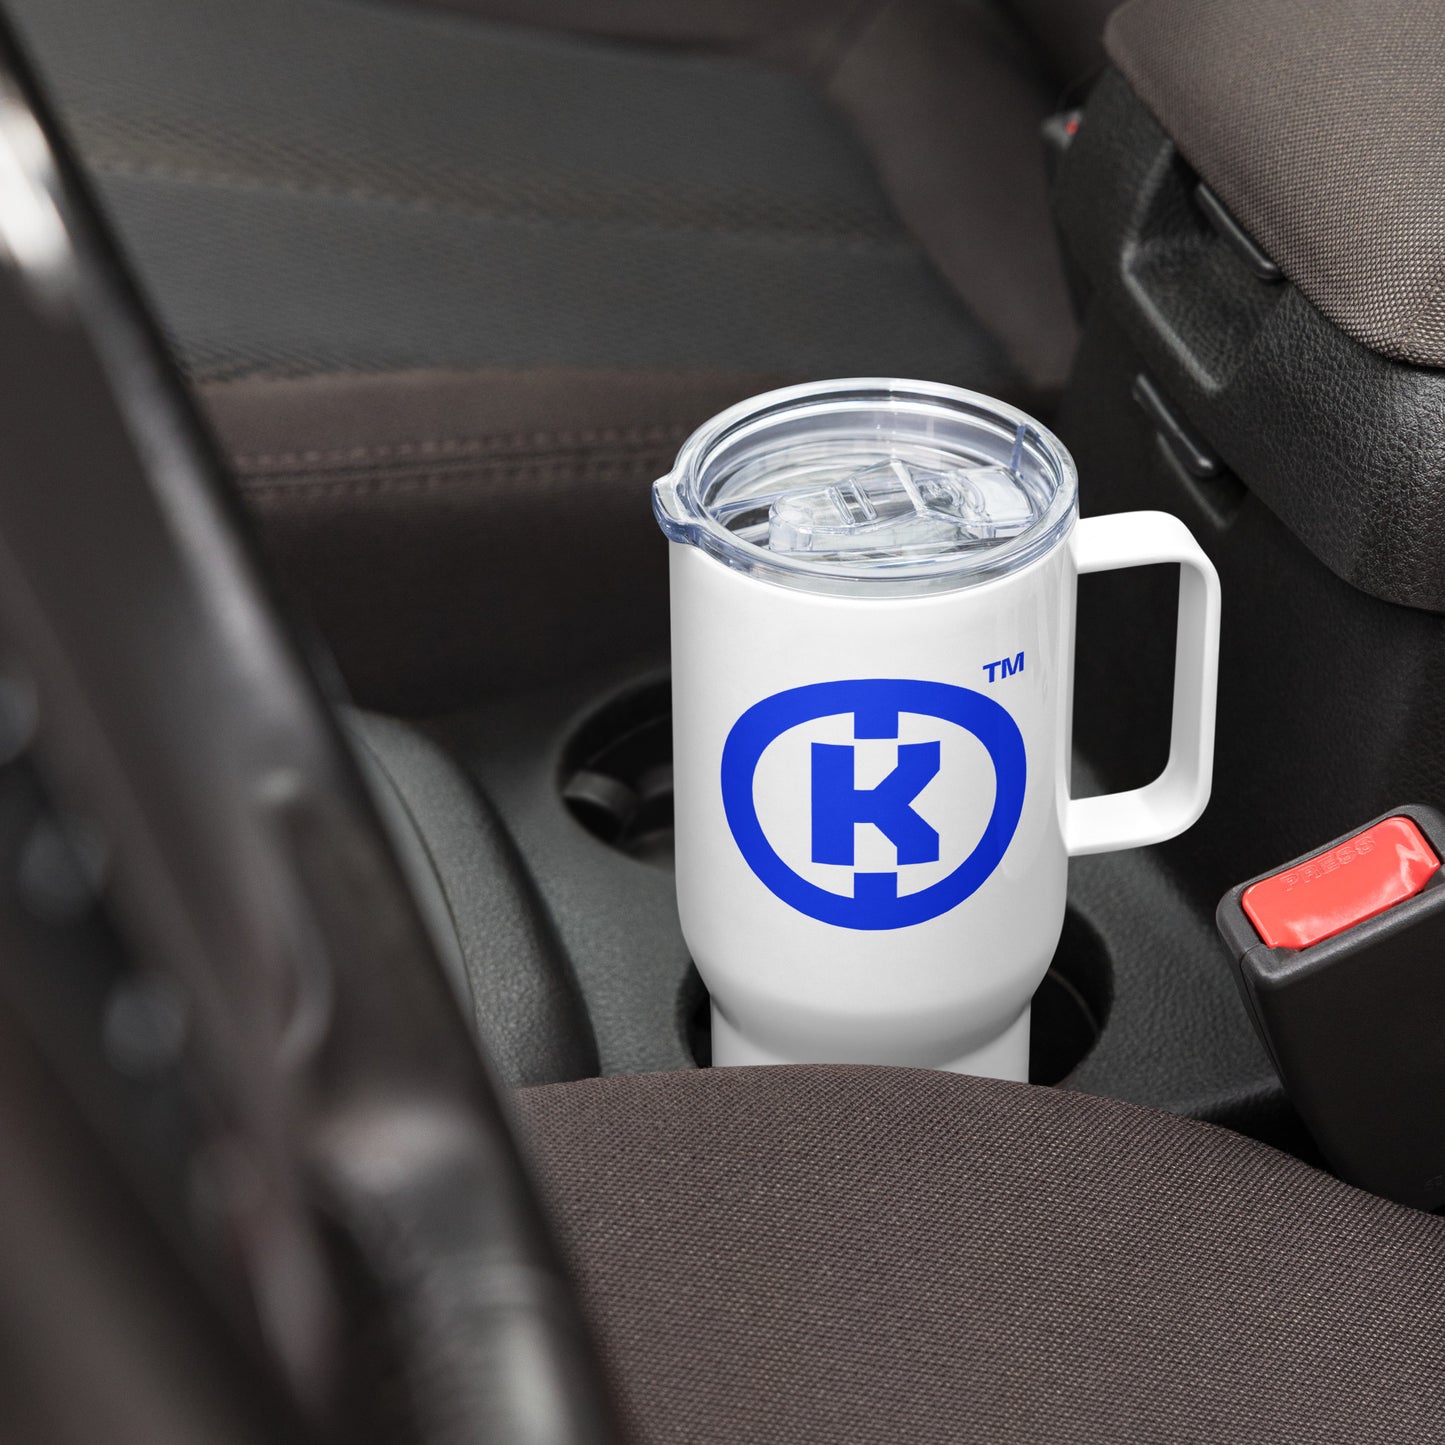 KURUMA "K" Travel mug with a handle